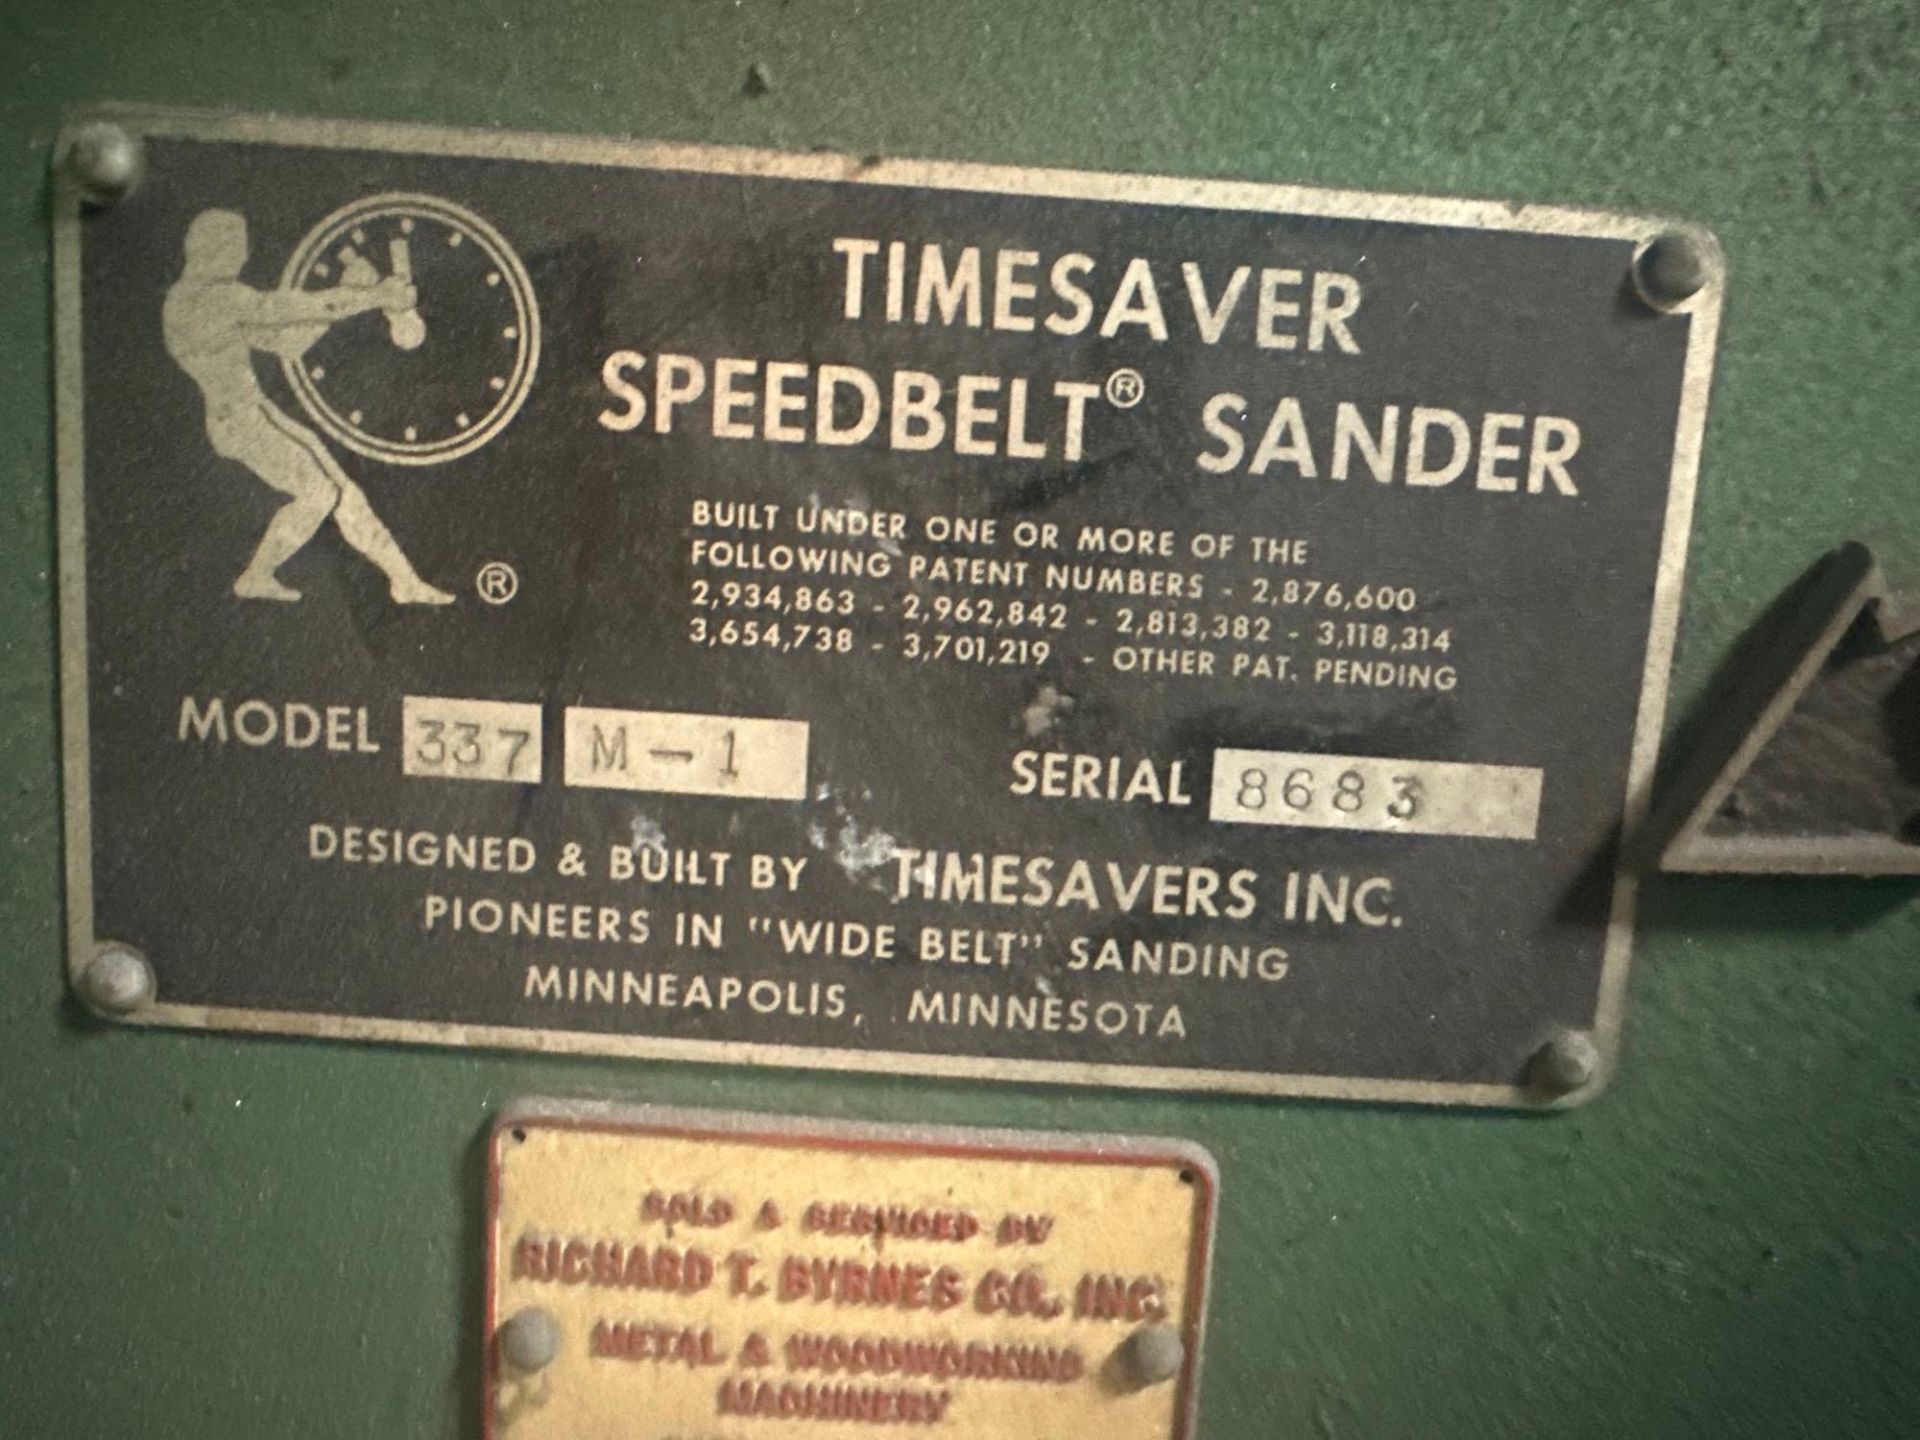 Timesaver 337M-1 36” Speedbelt Sander, s/n 8683 - Image 9 of 9